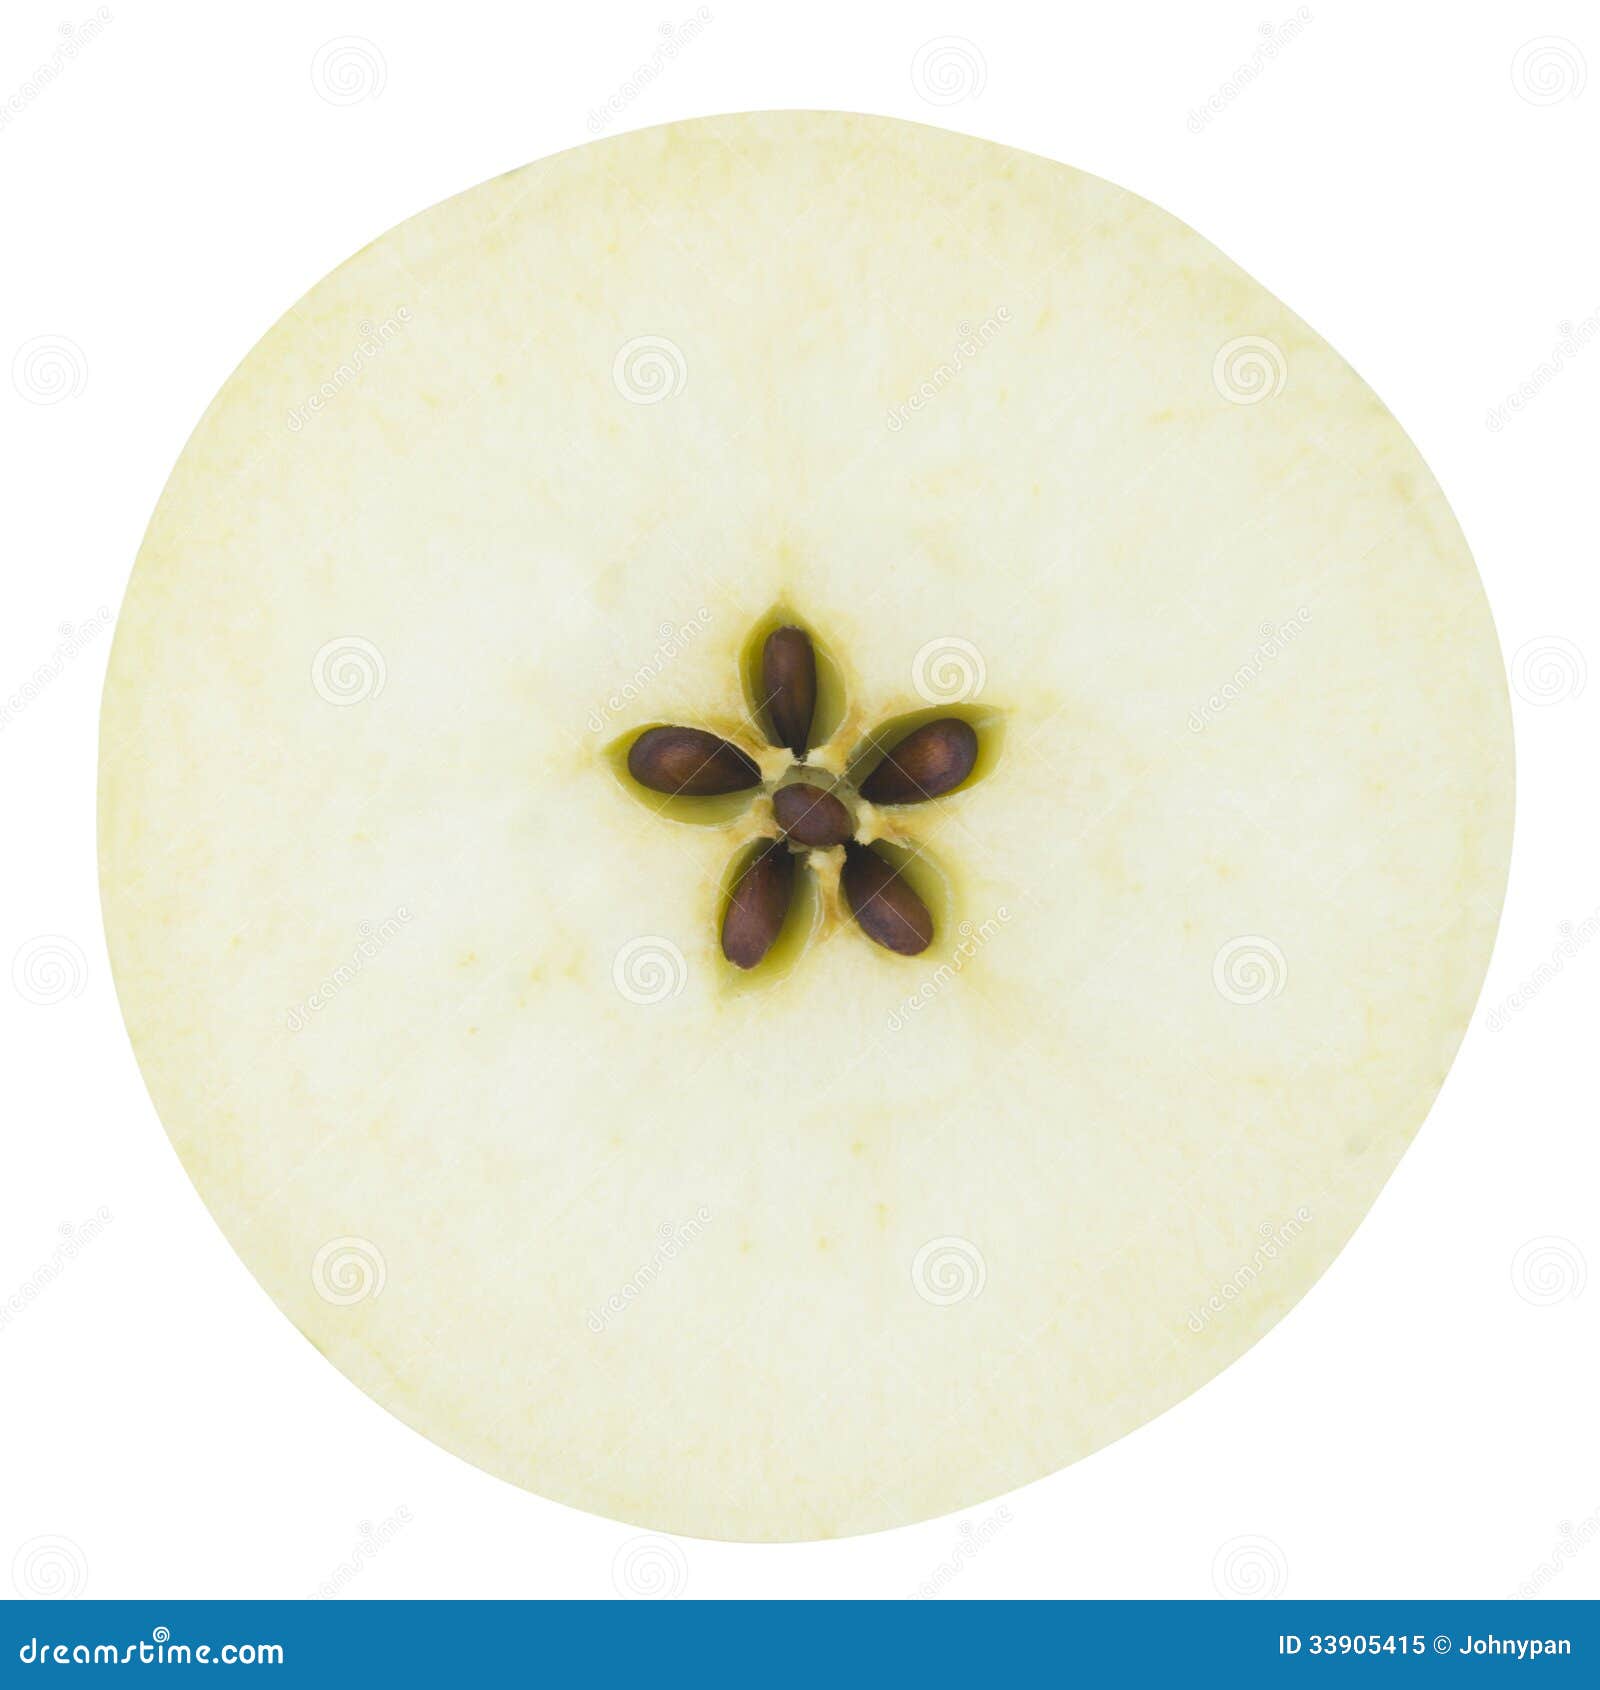 Apple slice stock image. Image of ingredient, sweet, fruit - 33905415